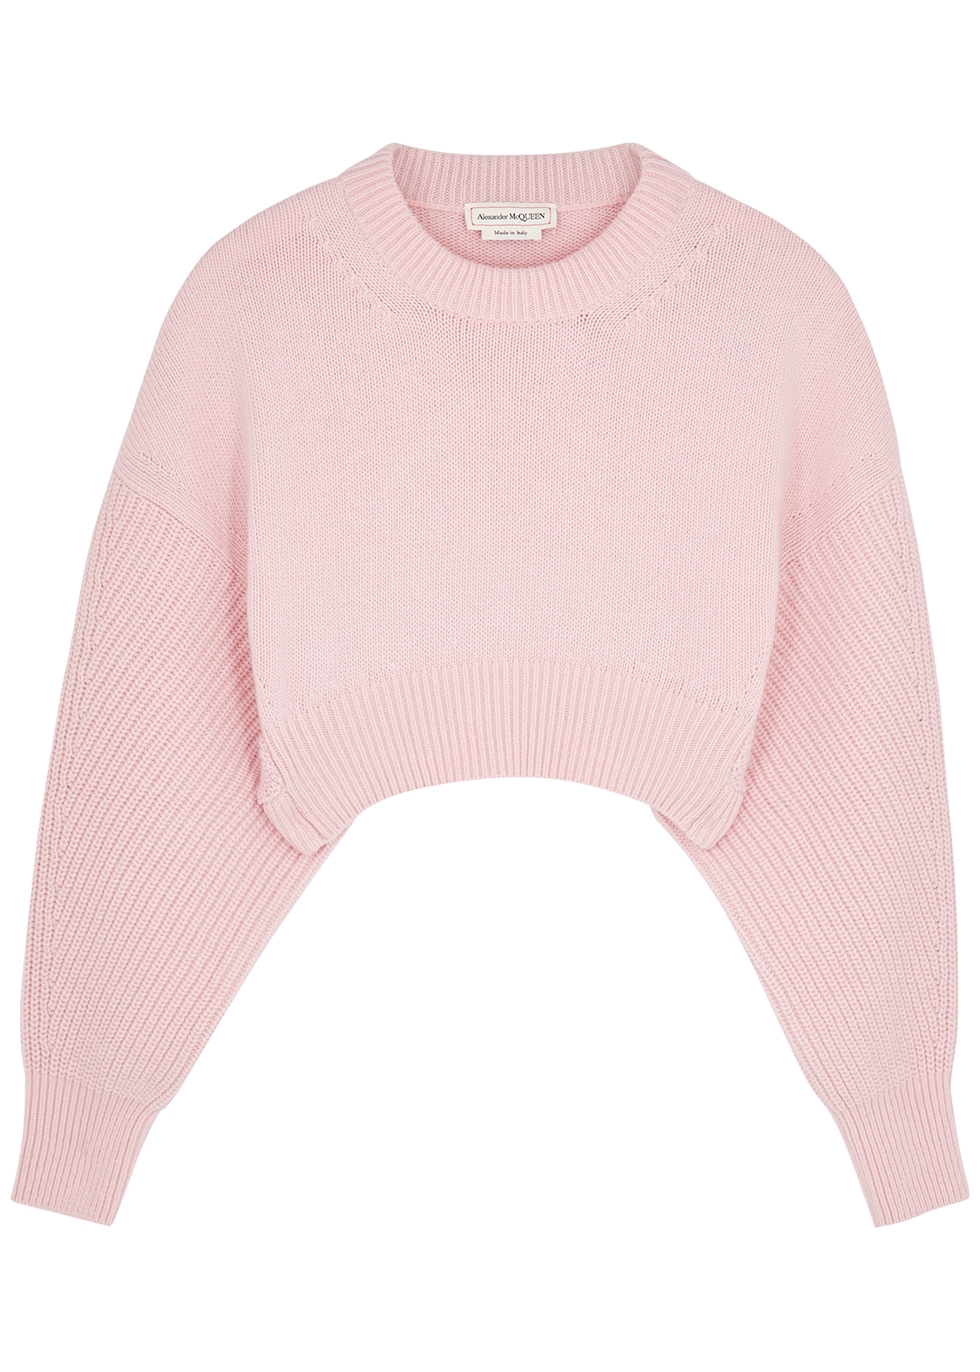 Alexander McQueen Light pink cropped wool jumper - Harvey Nichols